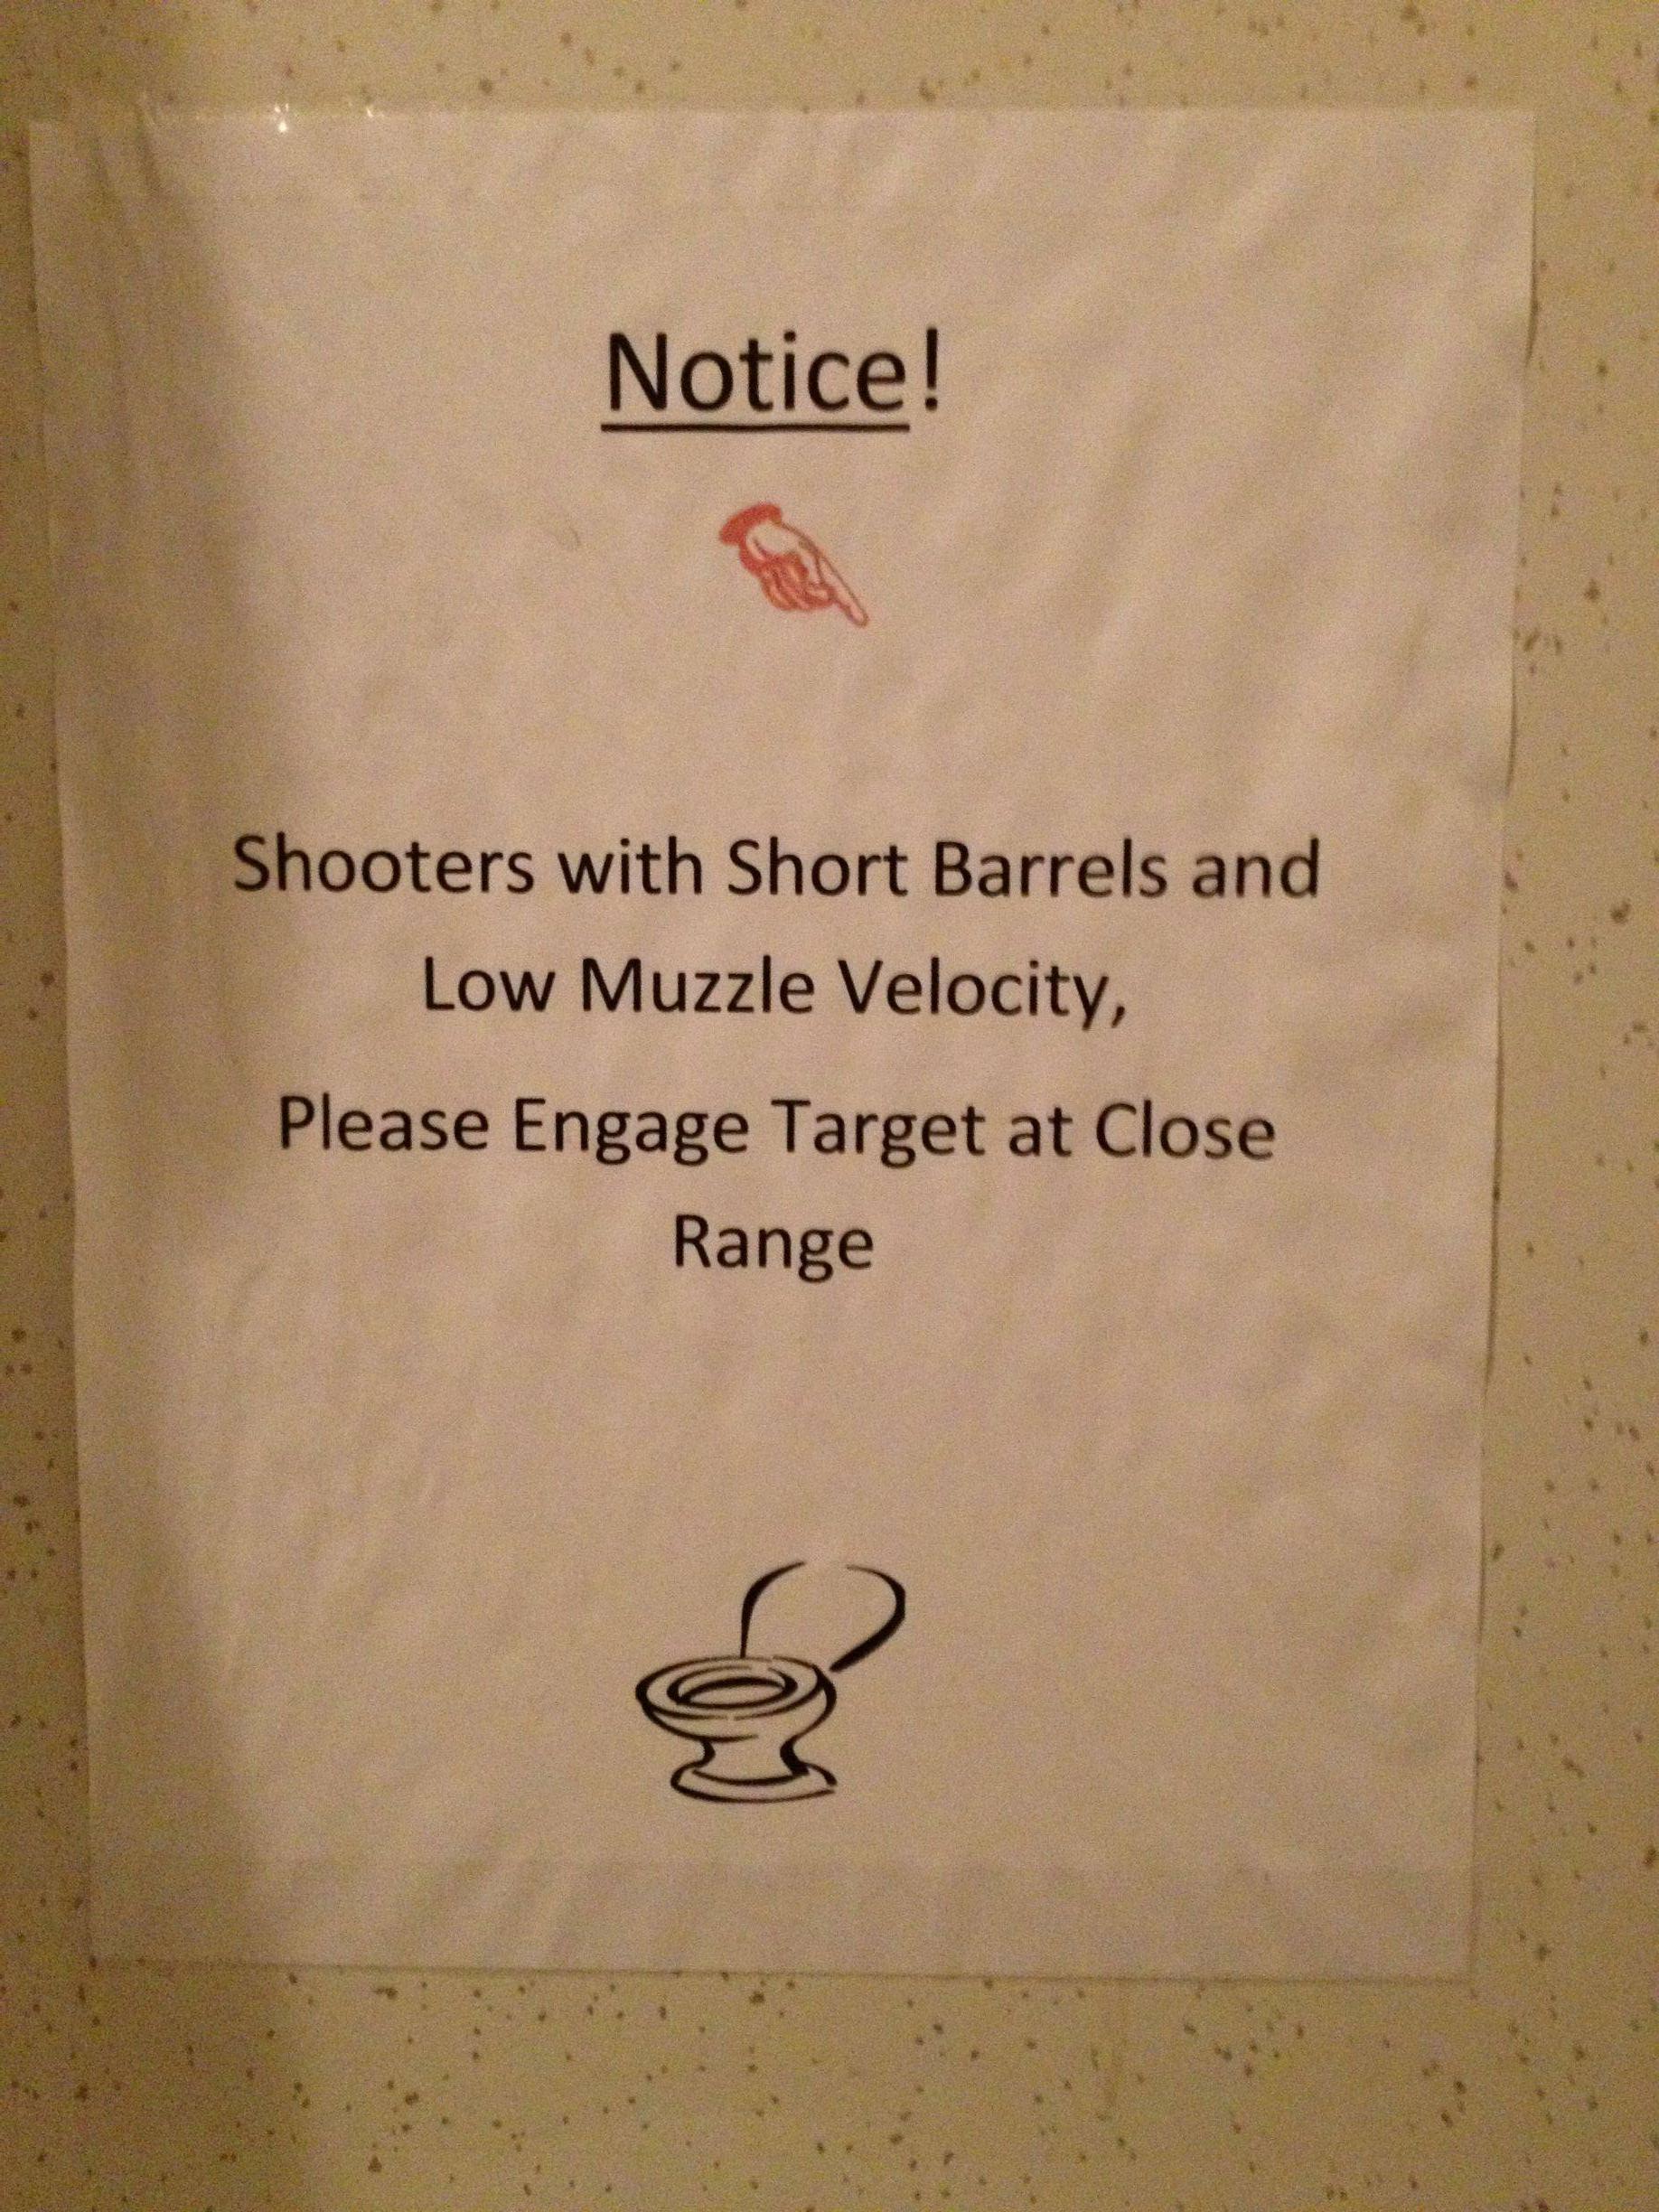 In a shooting range bathroom